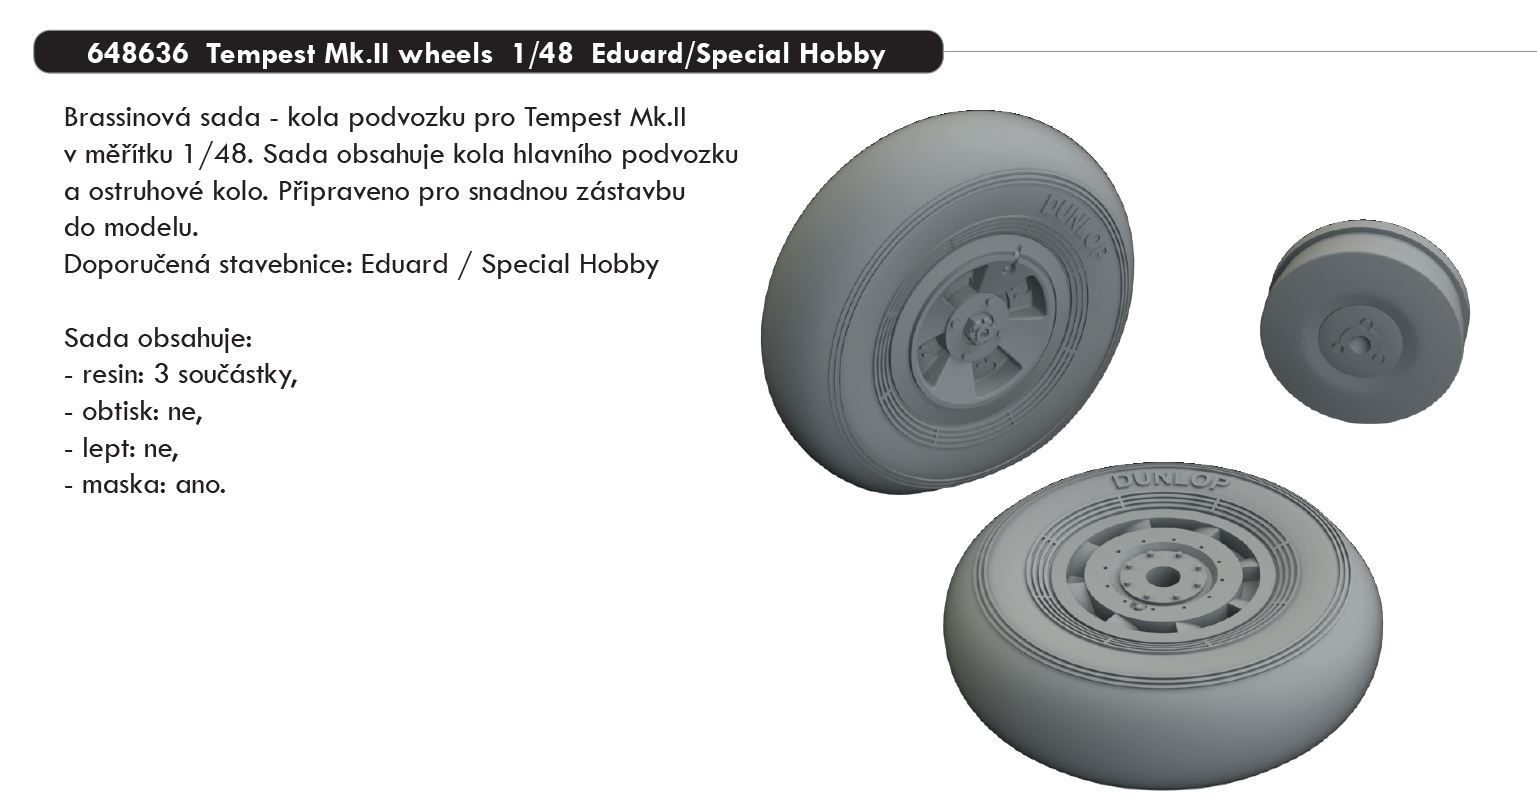 Fotografie 1/48 Tempest Mk.II wheels (EDUARD/SPECIAL HOBBY)